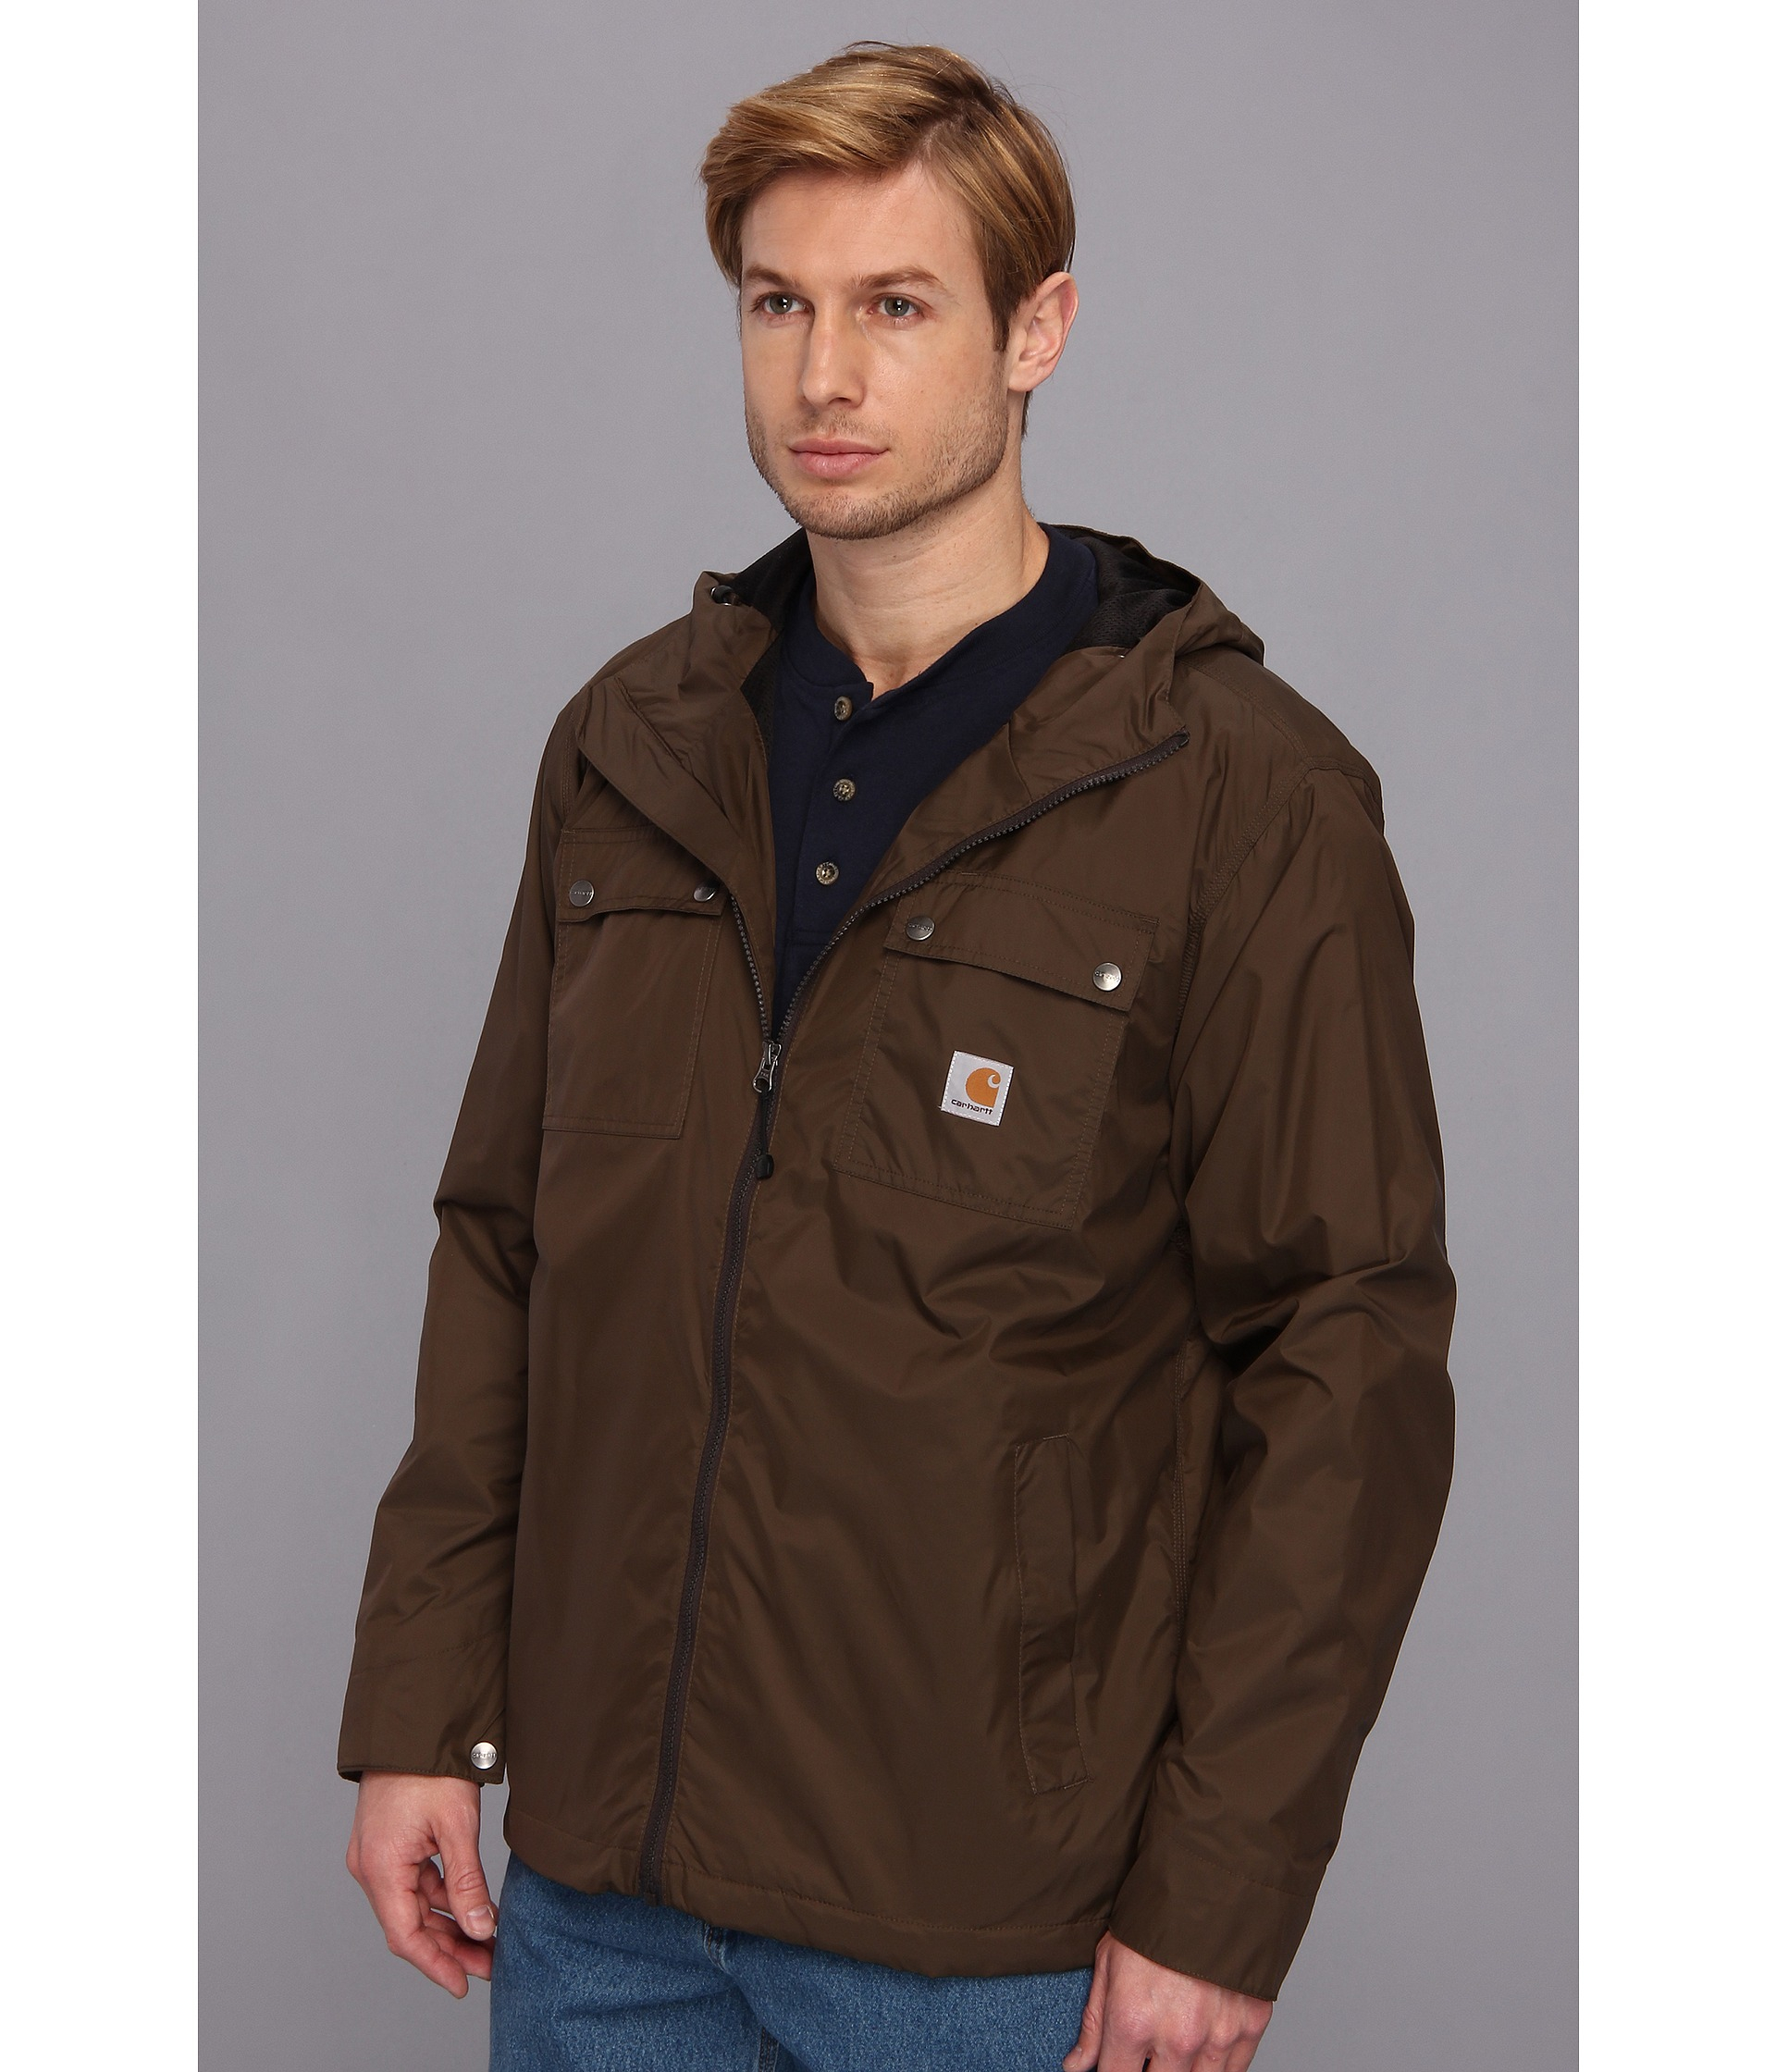 Lyst - Carhartt Rockford Jacket in Brown for Men